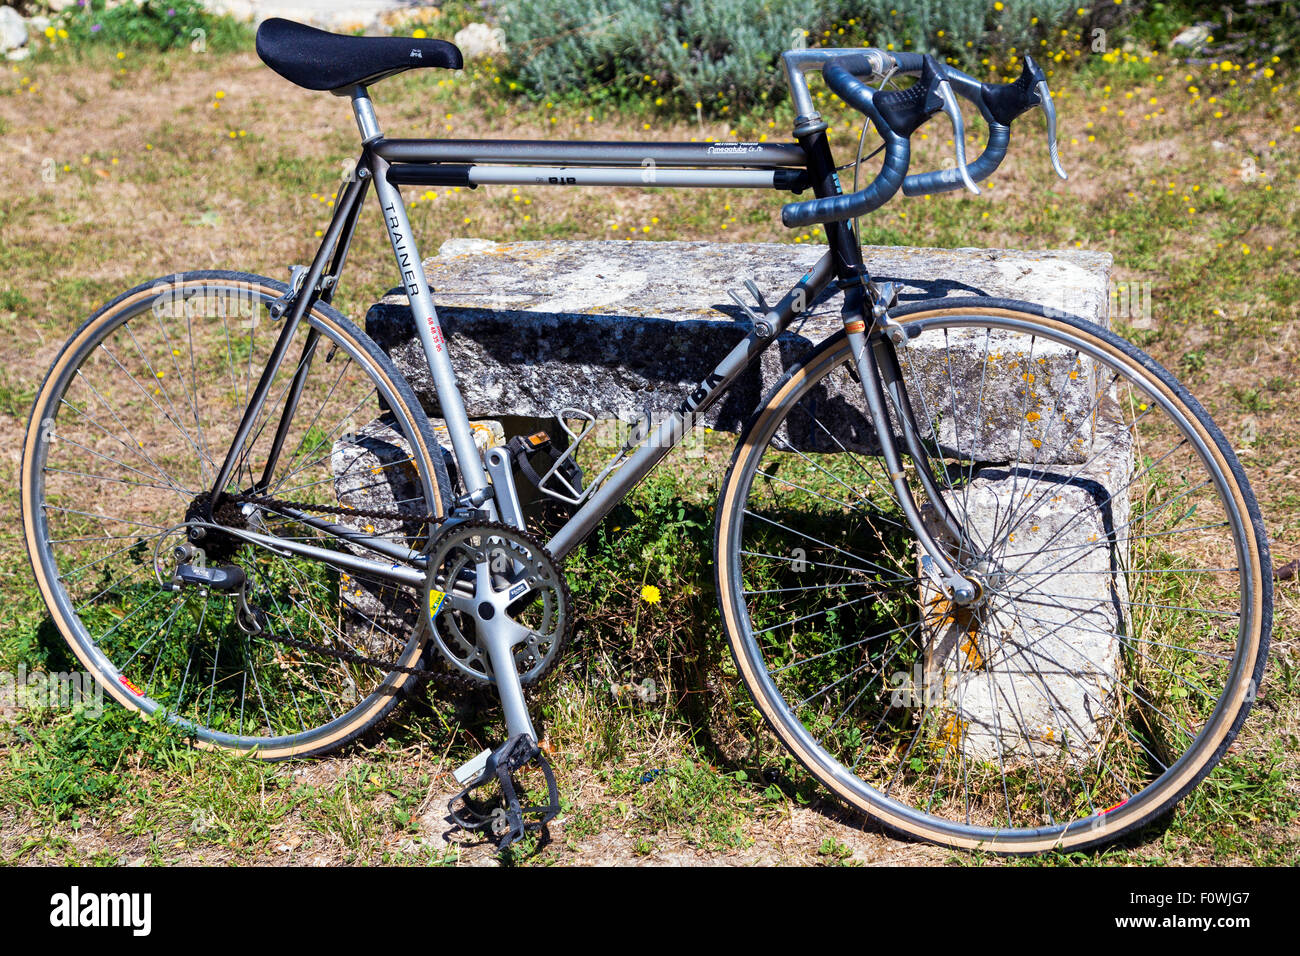 Racing bicycle -Fotos und -Bildmaterial in hoher Auflösung – Alamy